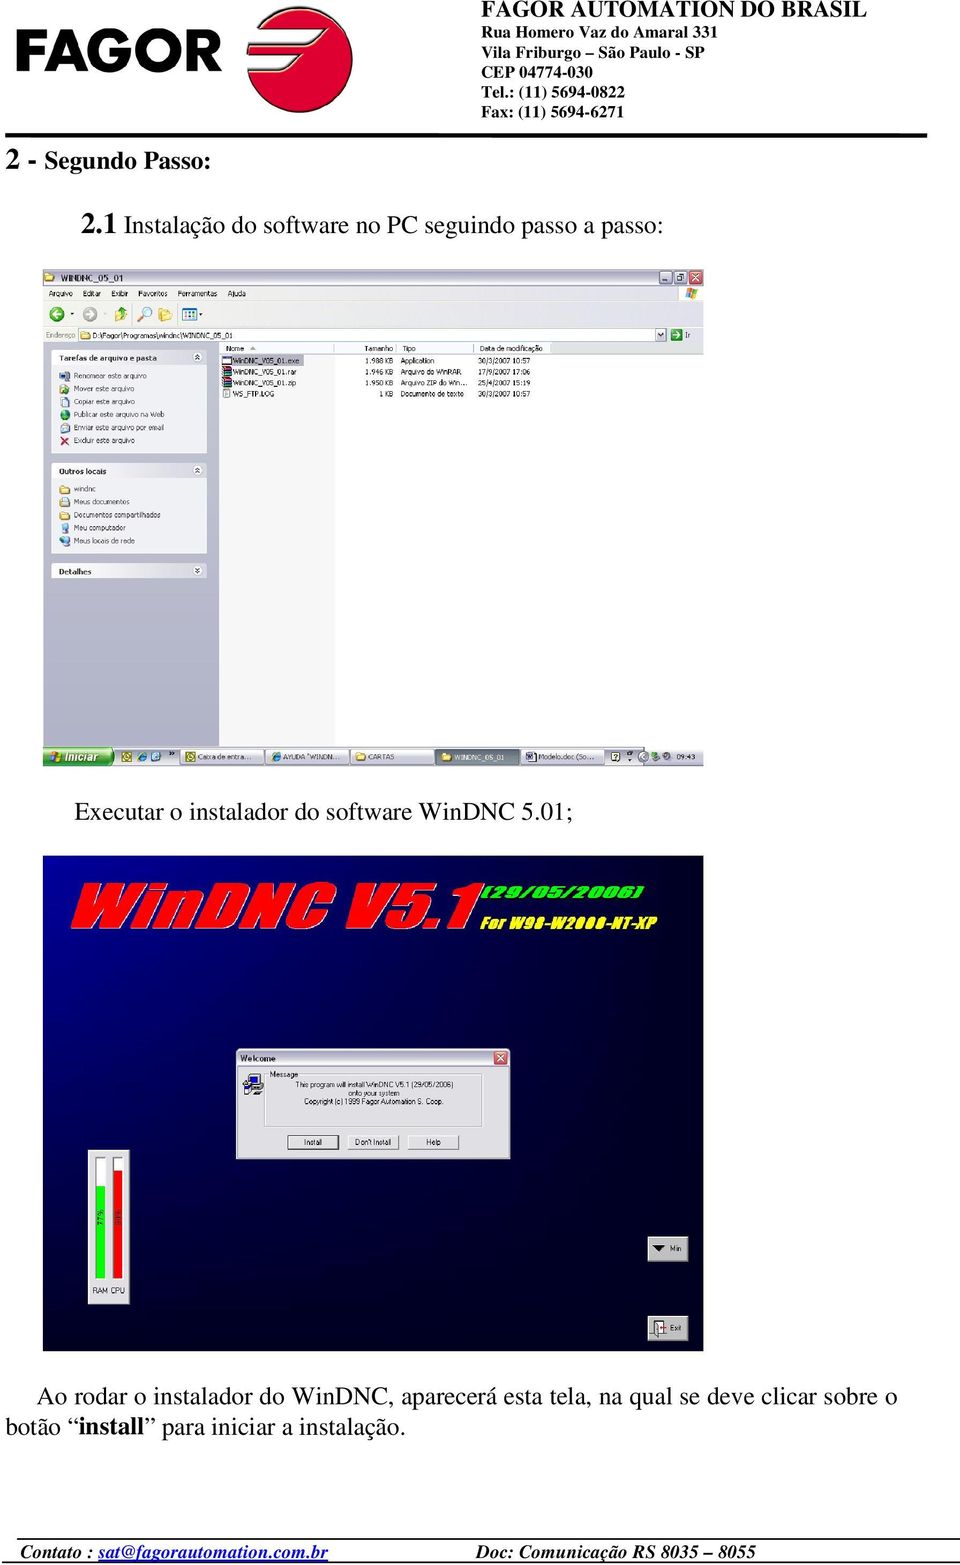 Executar o instalador do software WinDNC 5.